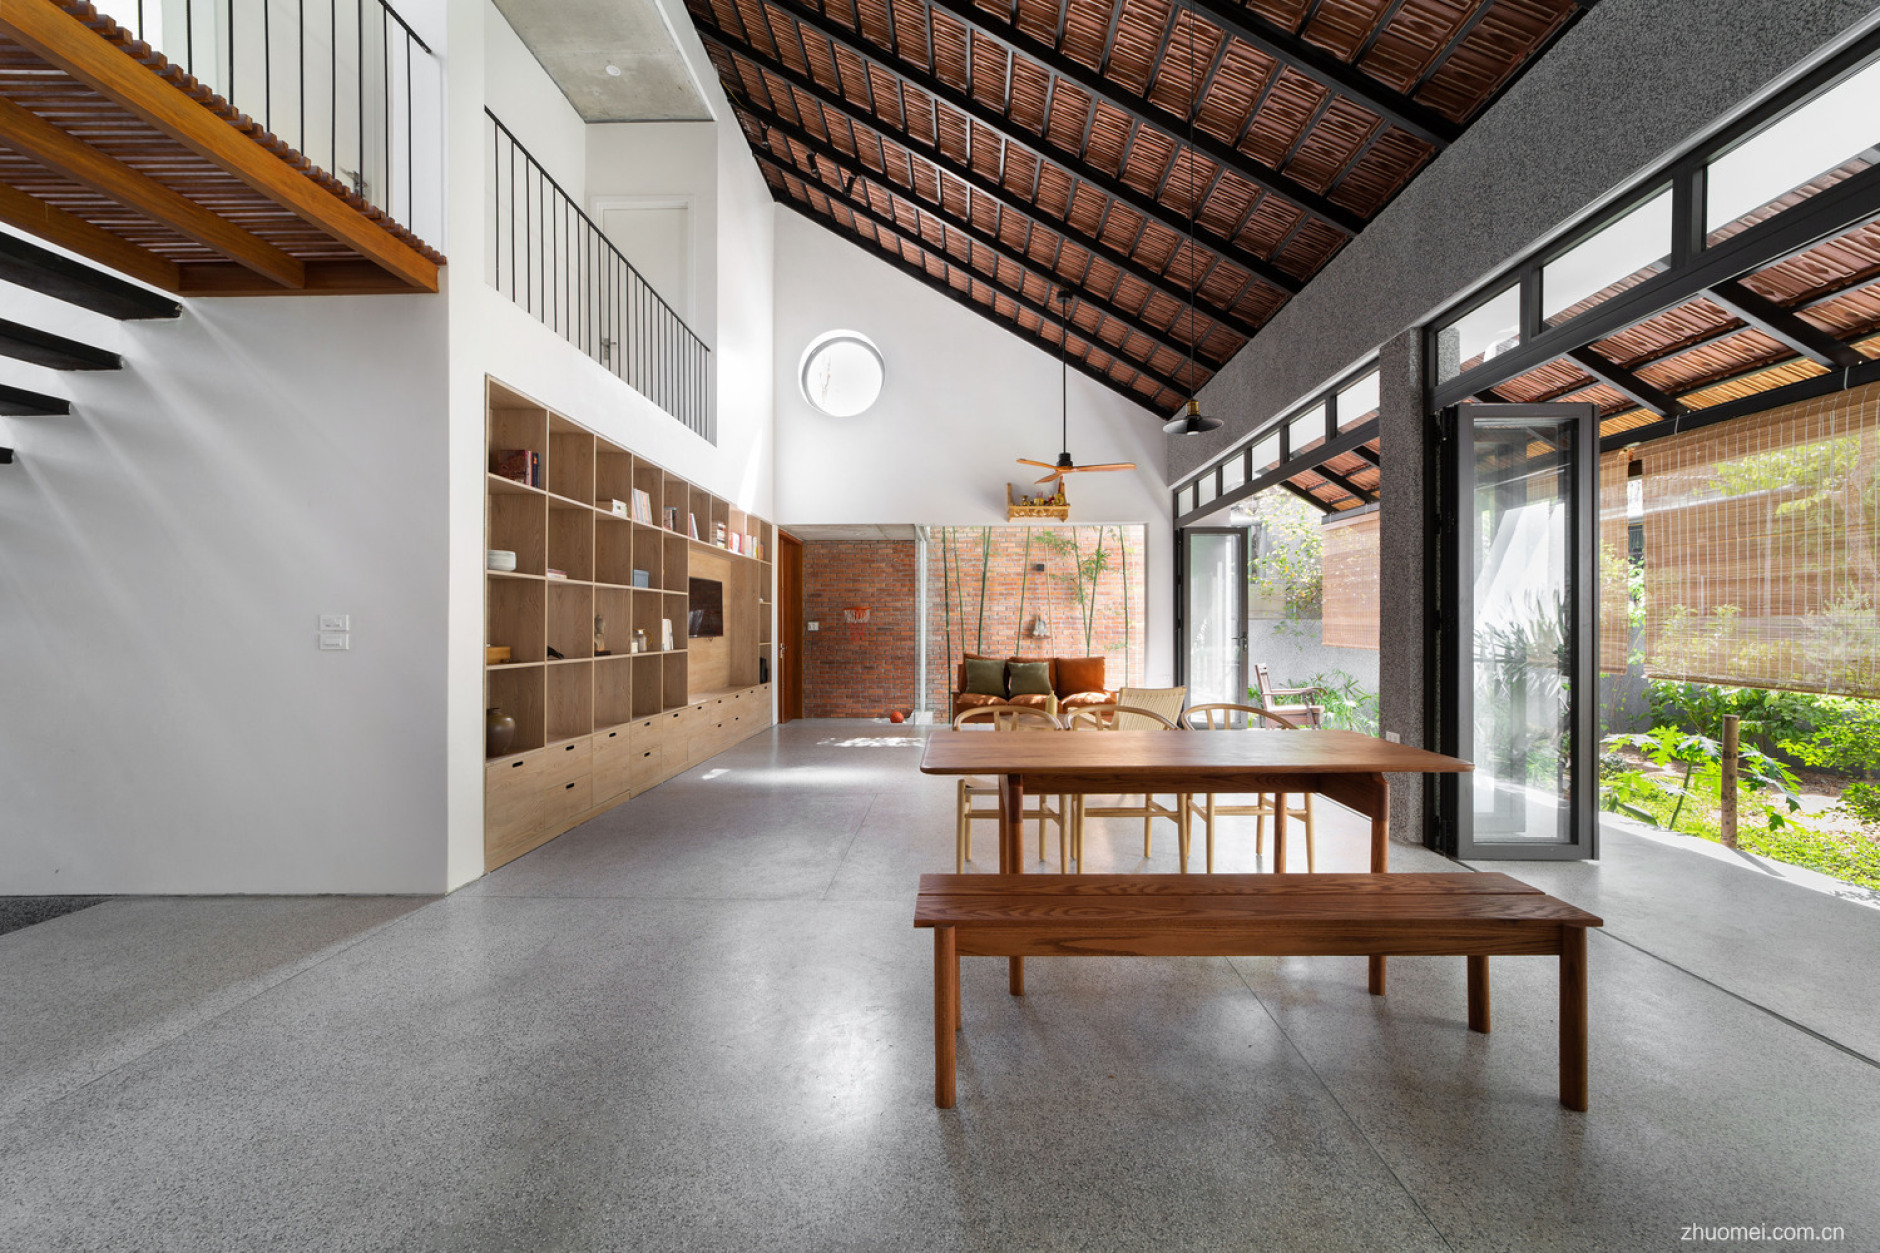 Dom Architect Studio丨The Tiamo House丨越南-11